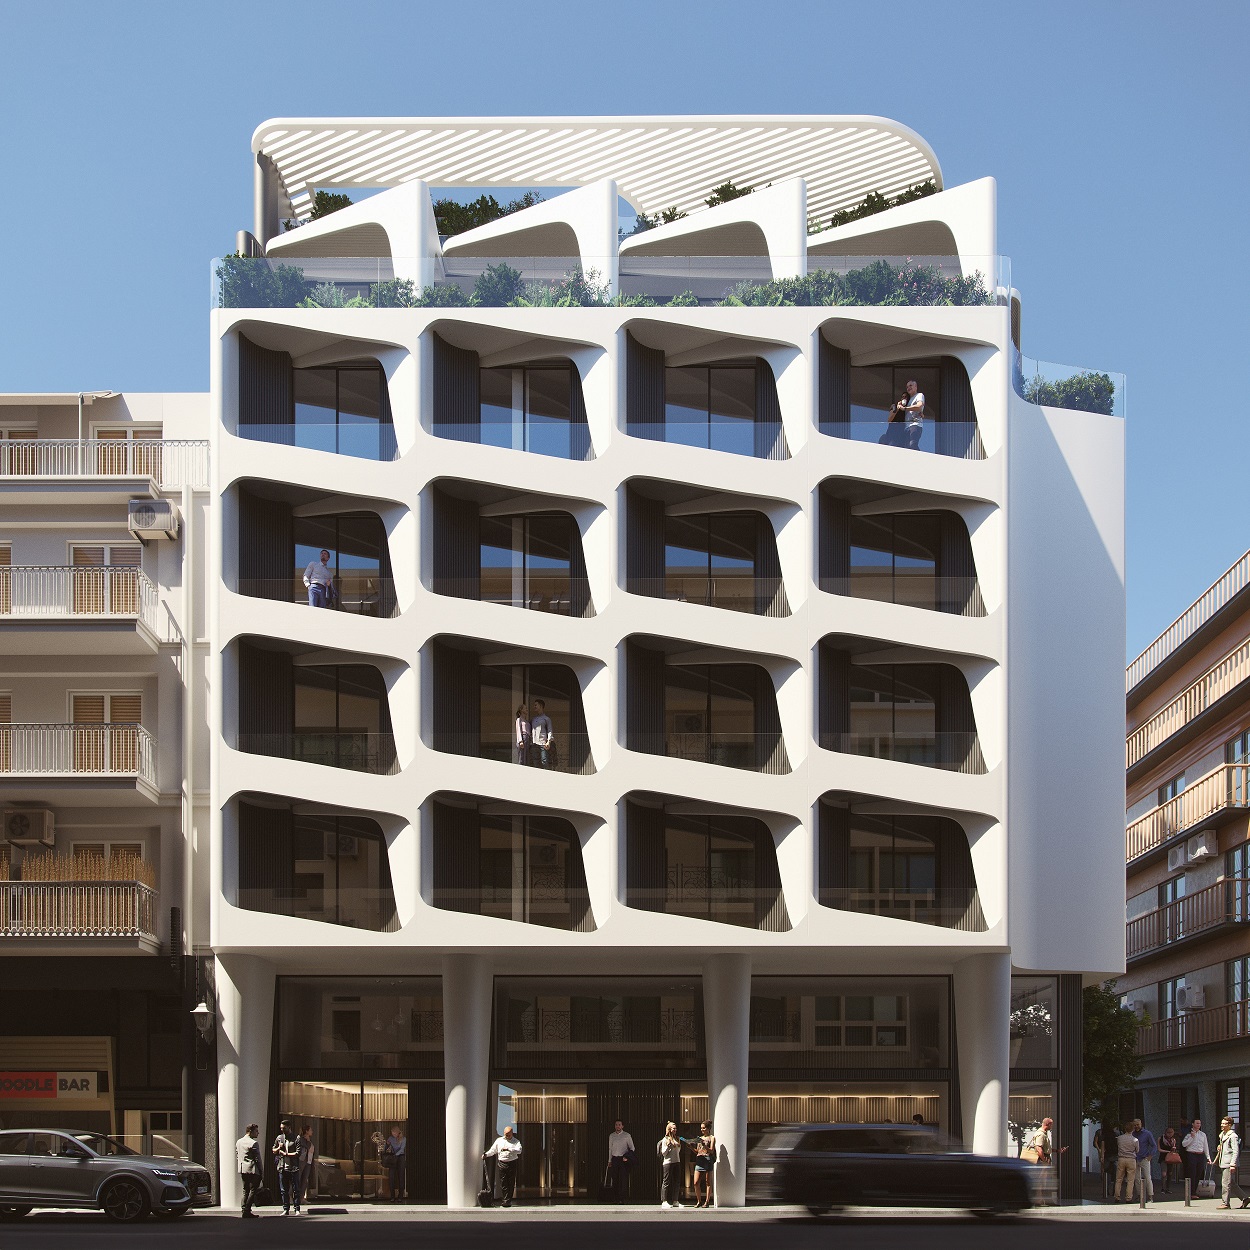 The Twist: Η Potiropoulos+Partners παρουσιάζει μια νέα σχεδιαστική αρχιτεκτονική πρόταση